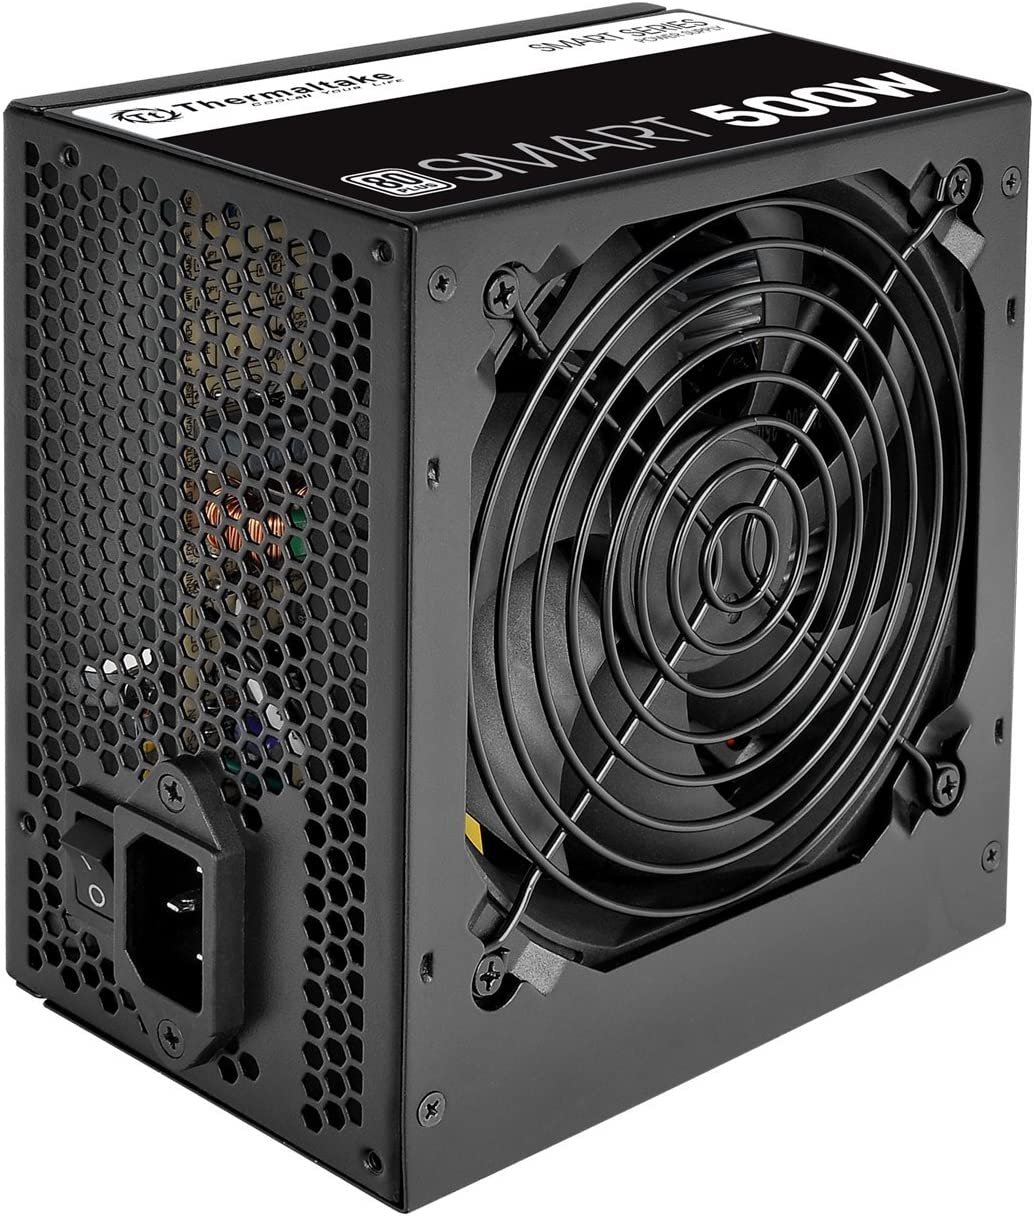 7 Power Supply - Best $500 PC Build 2023